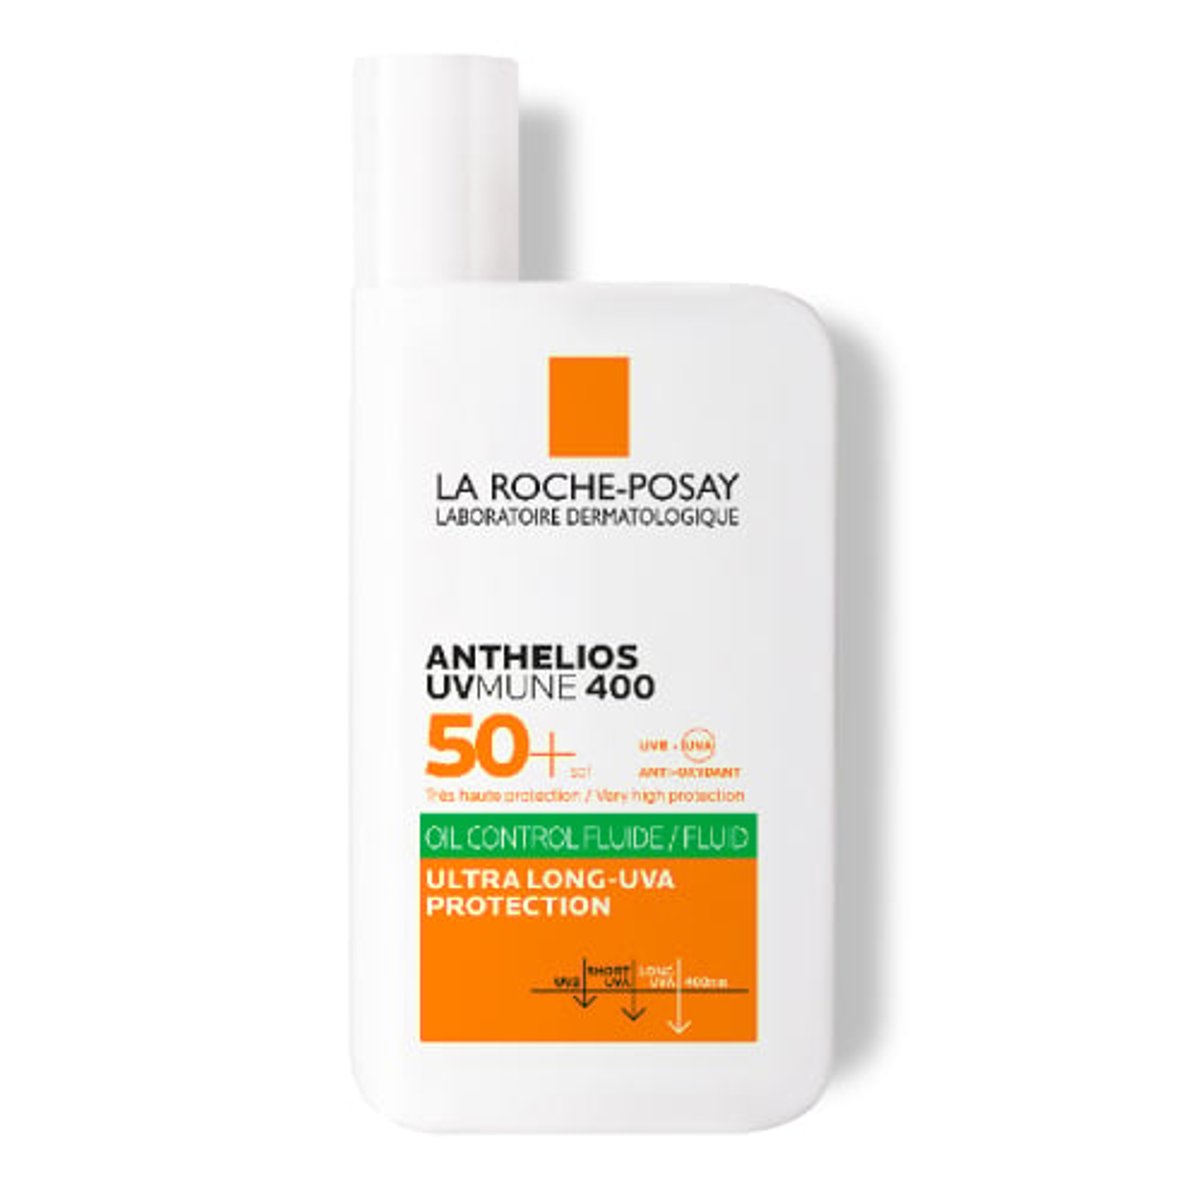 LA ROCHE-POSAY ANTHELIOS Oil Control Fluid SPF50+ 50ml